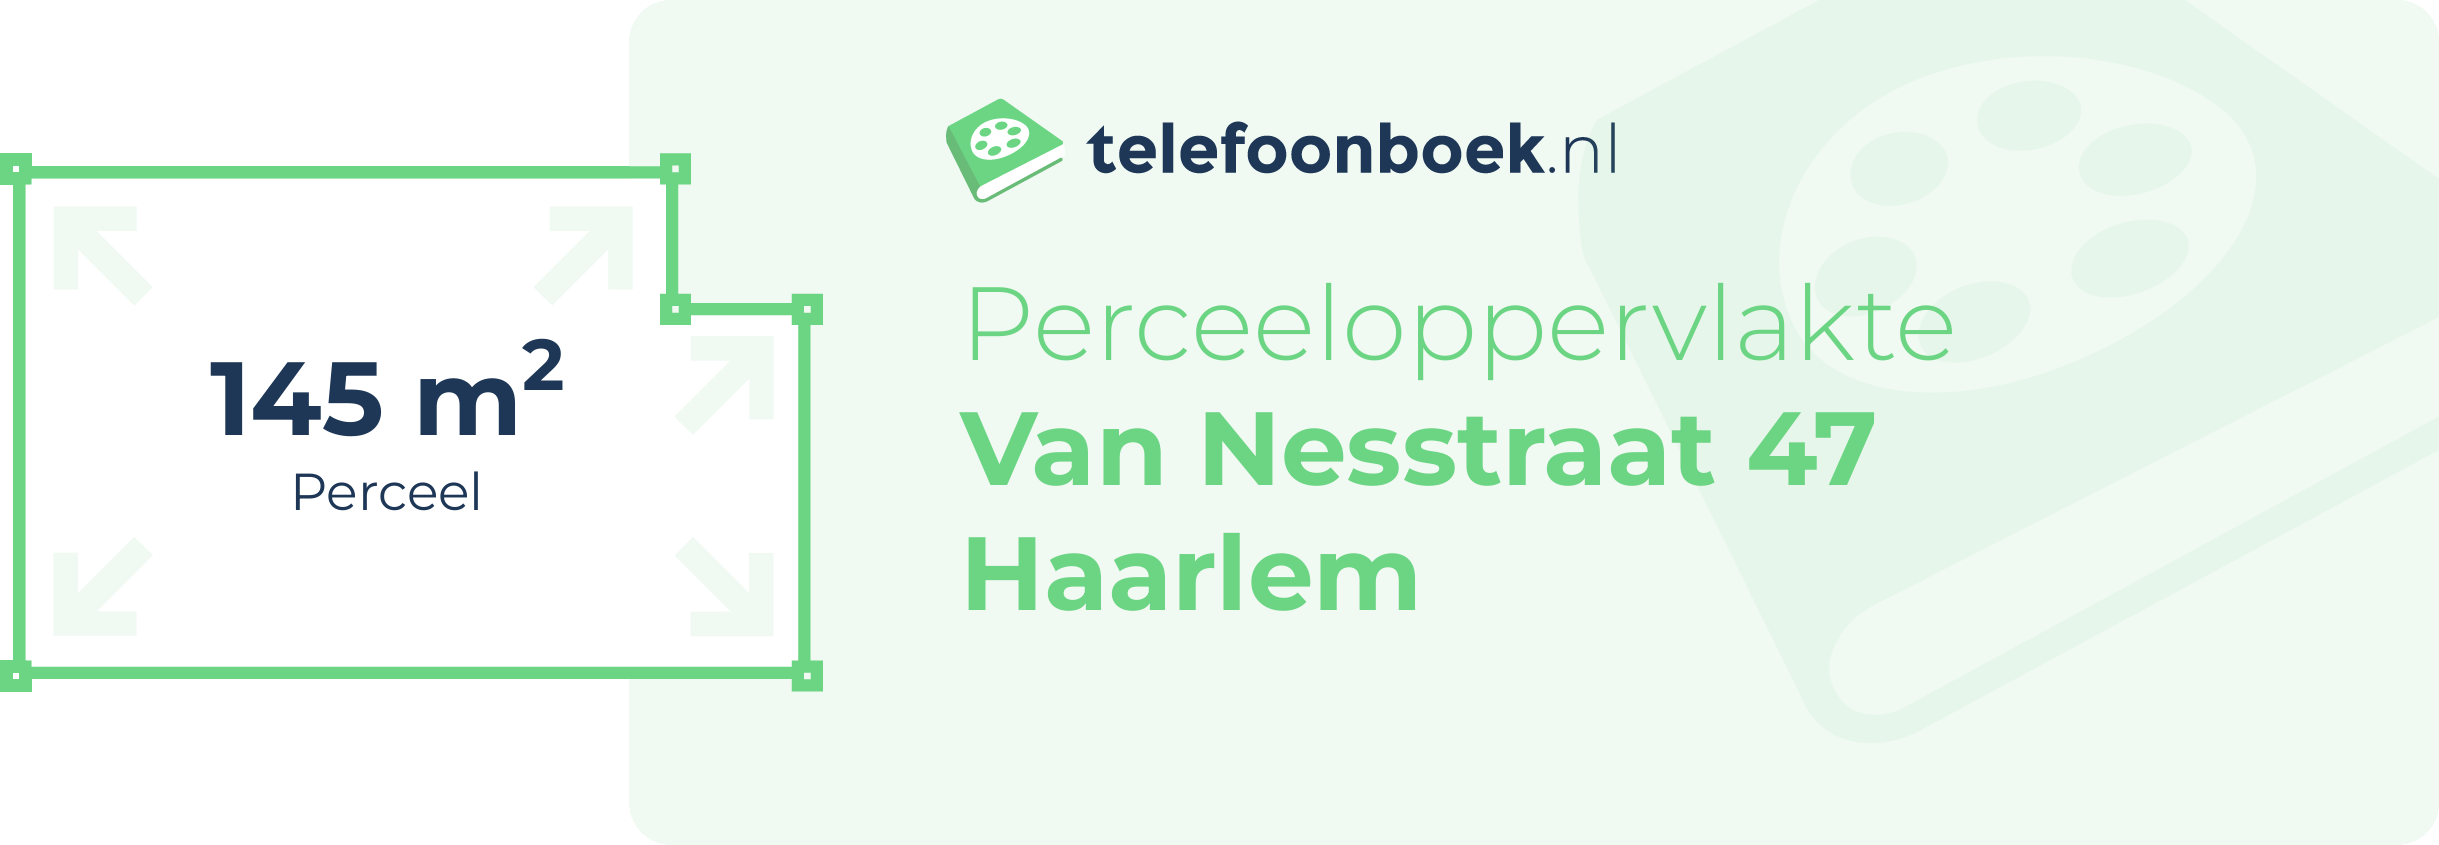 Perceeloppervlakte Van Nesstraat 47 Haarlem